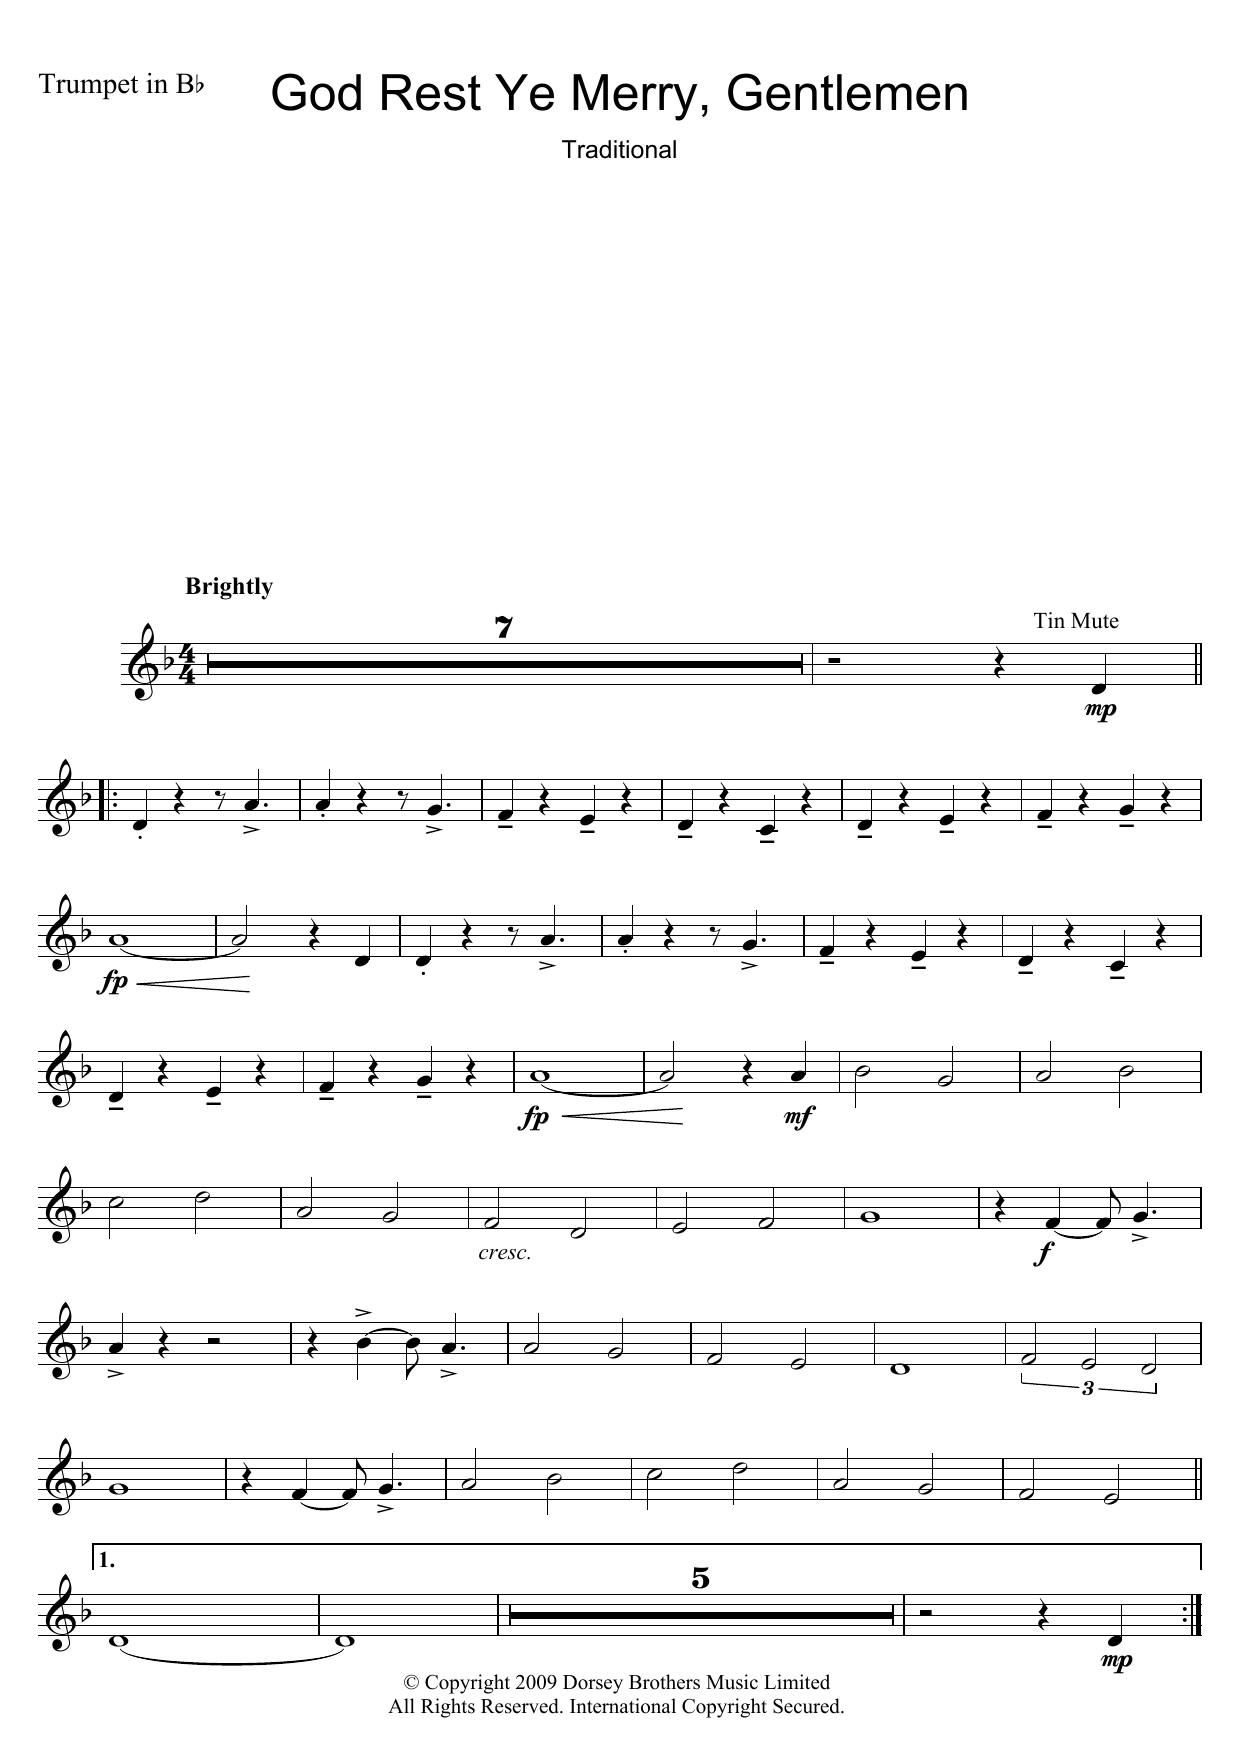 Traditional Carol God Rest Ye Merry, Gentlemen Sheet Music Notes & Chords for Alto Saxophone - Download or Print PDF